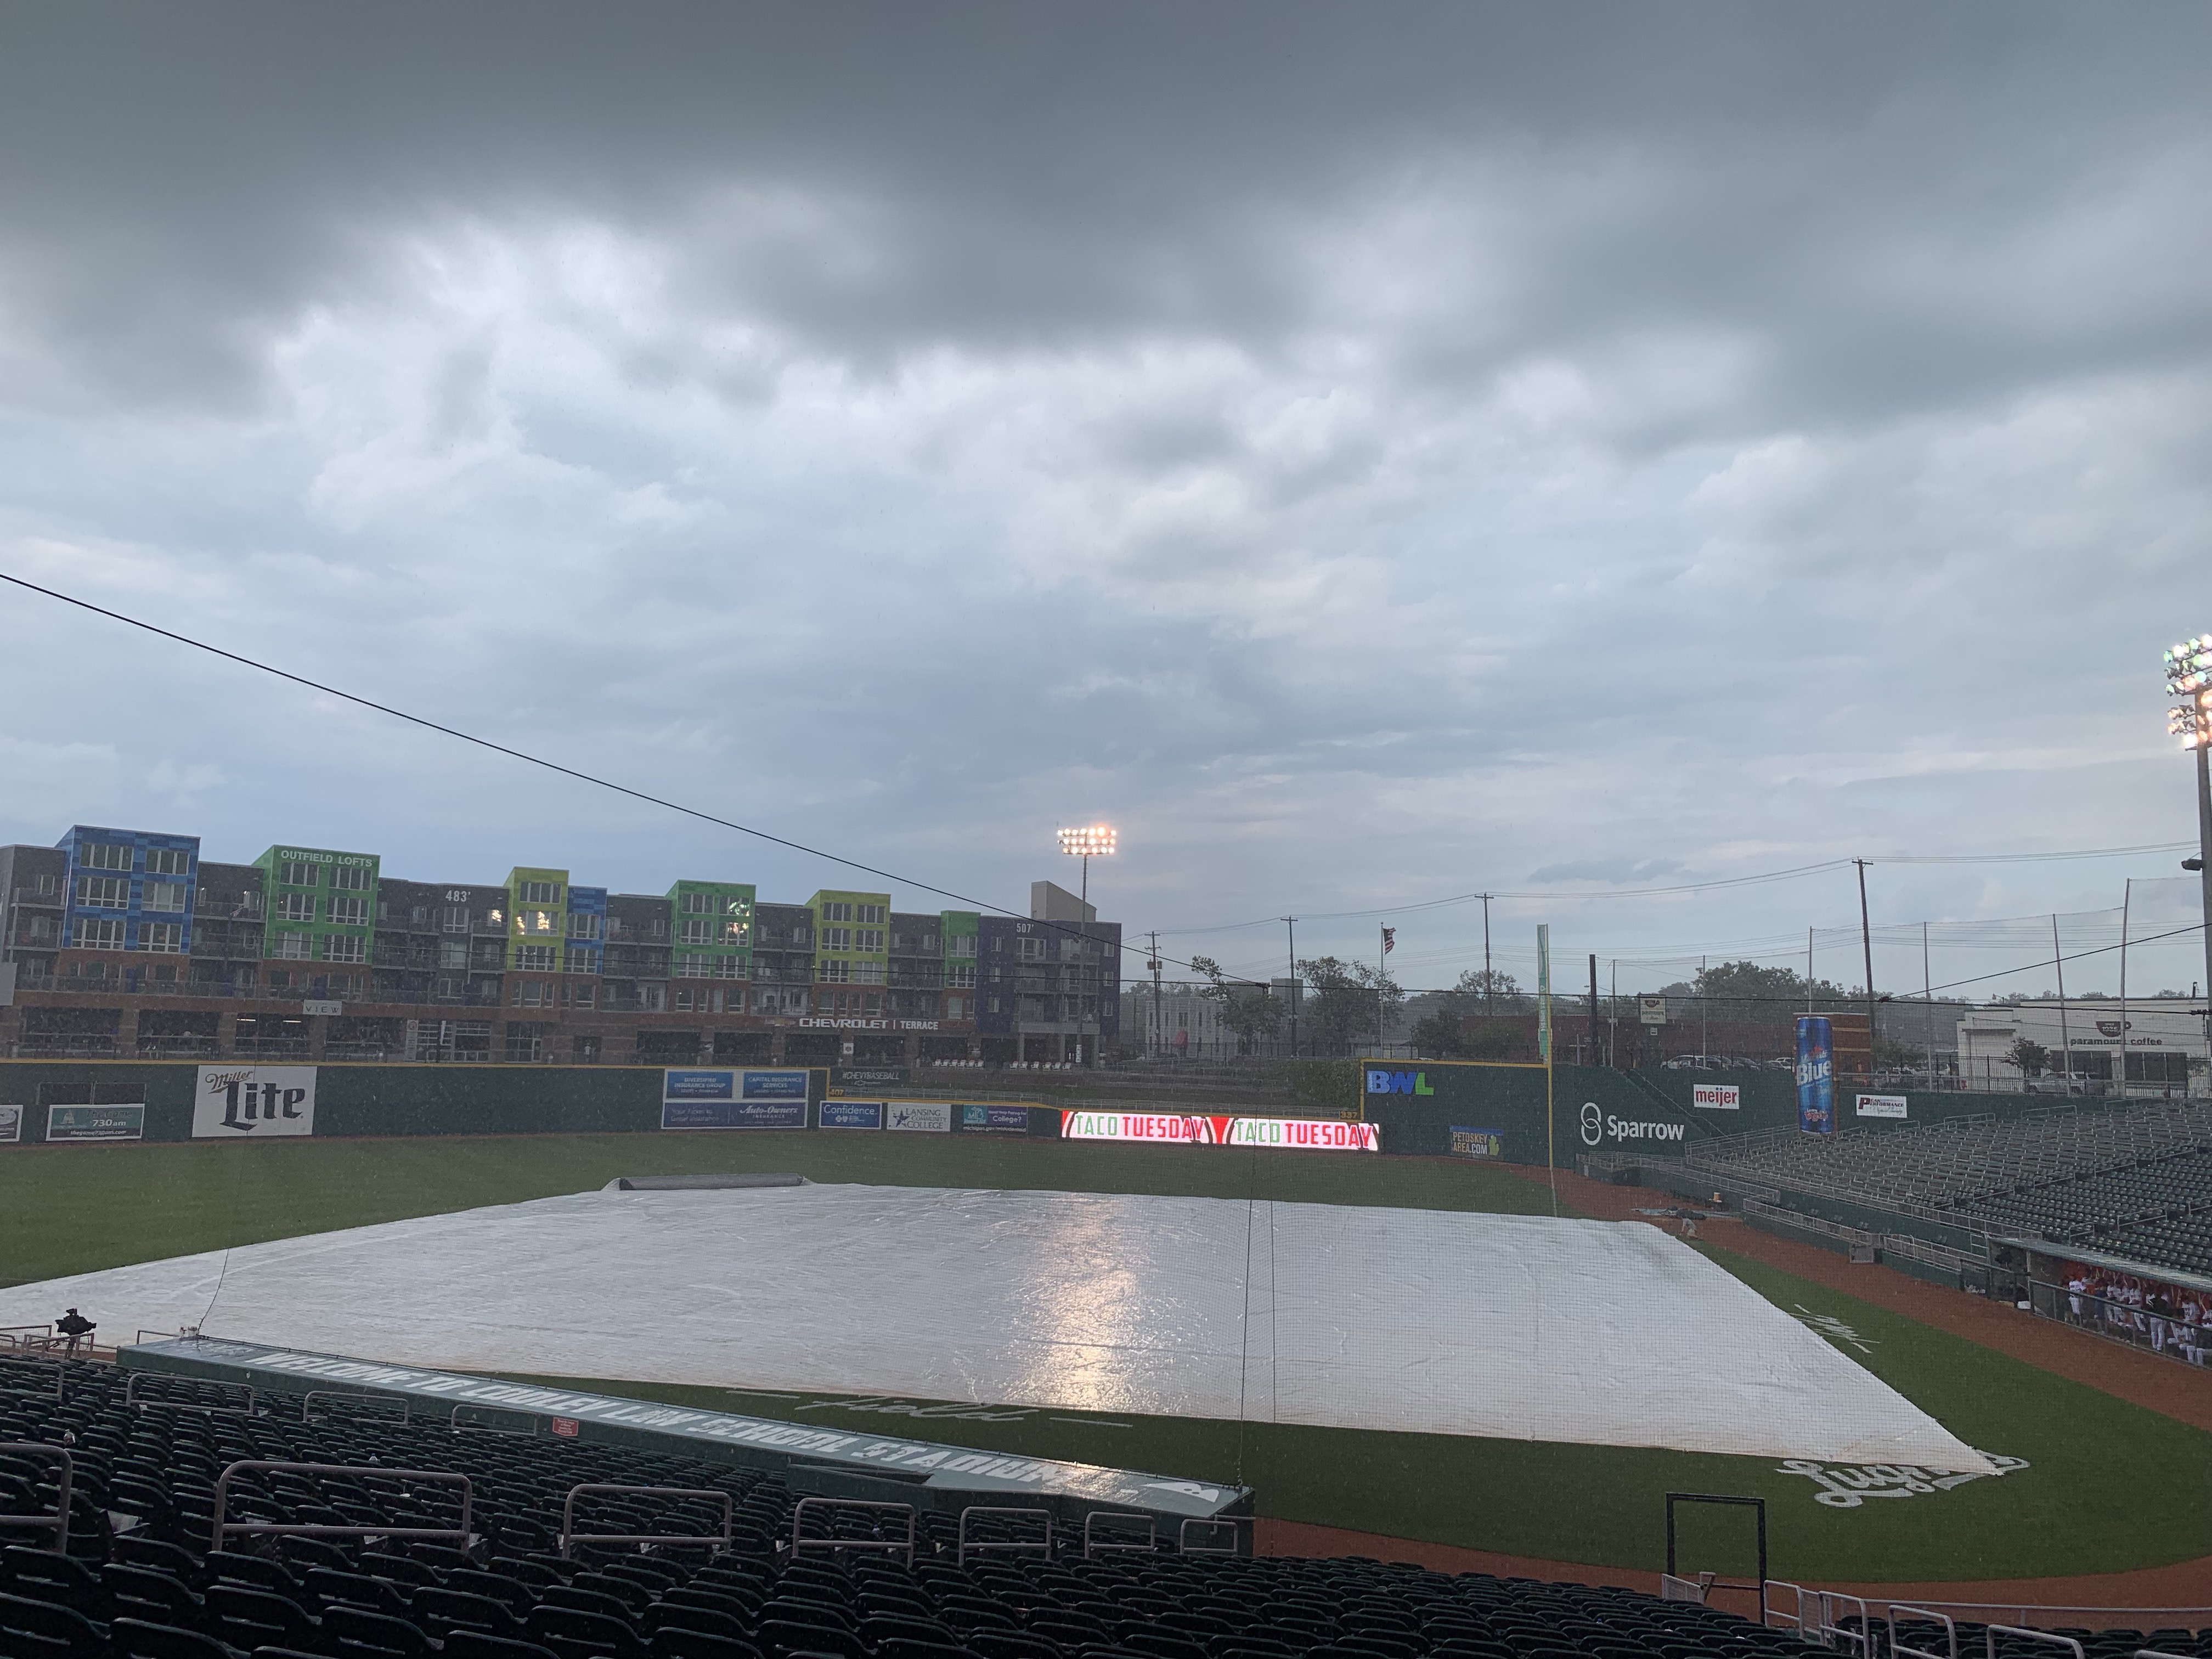 Lugnuts baseball game delayed due to rain.